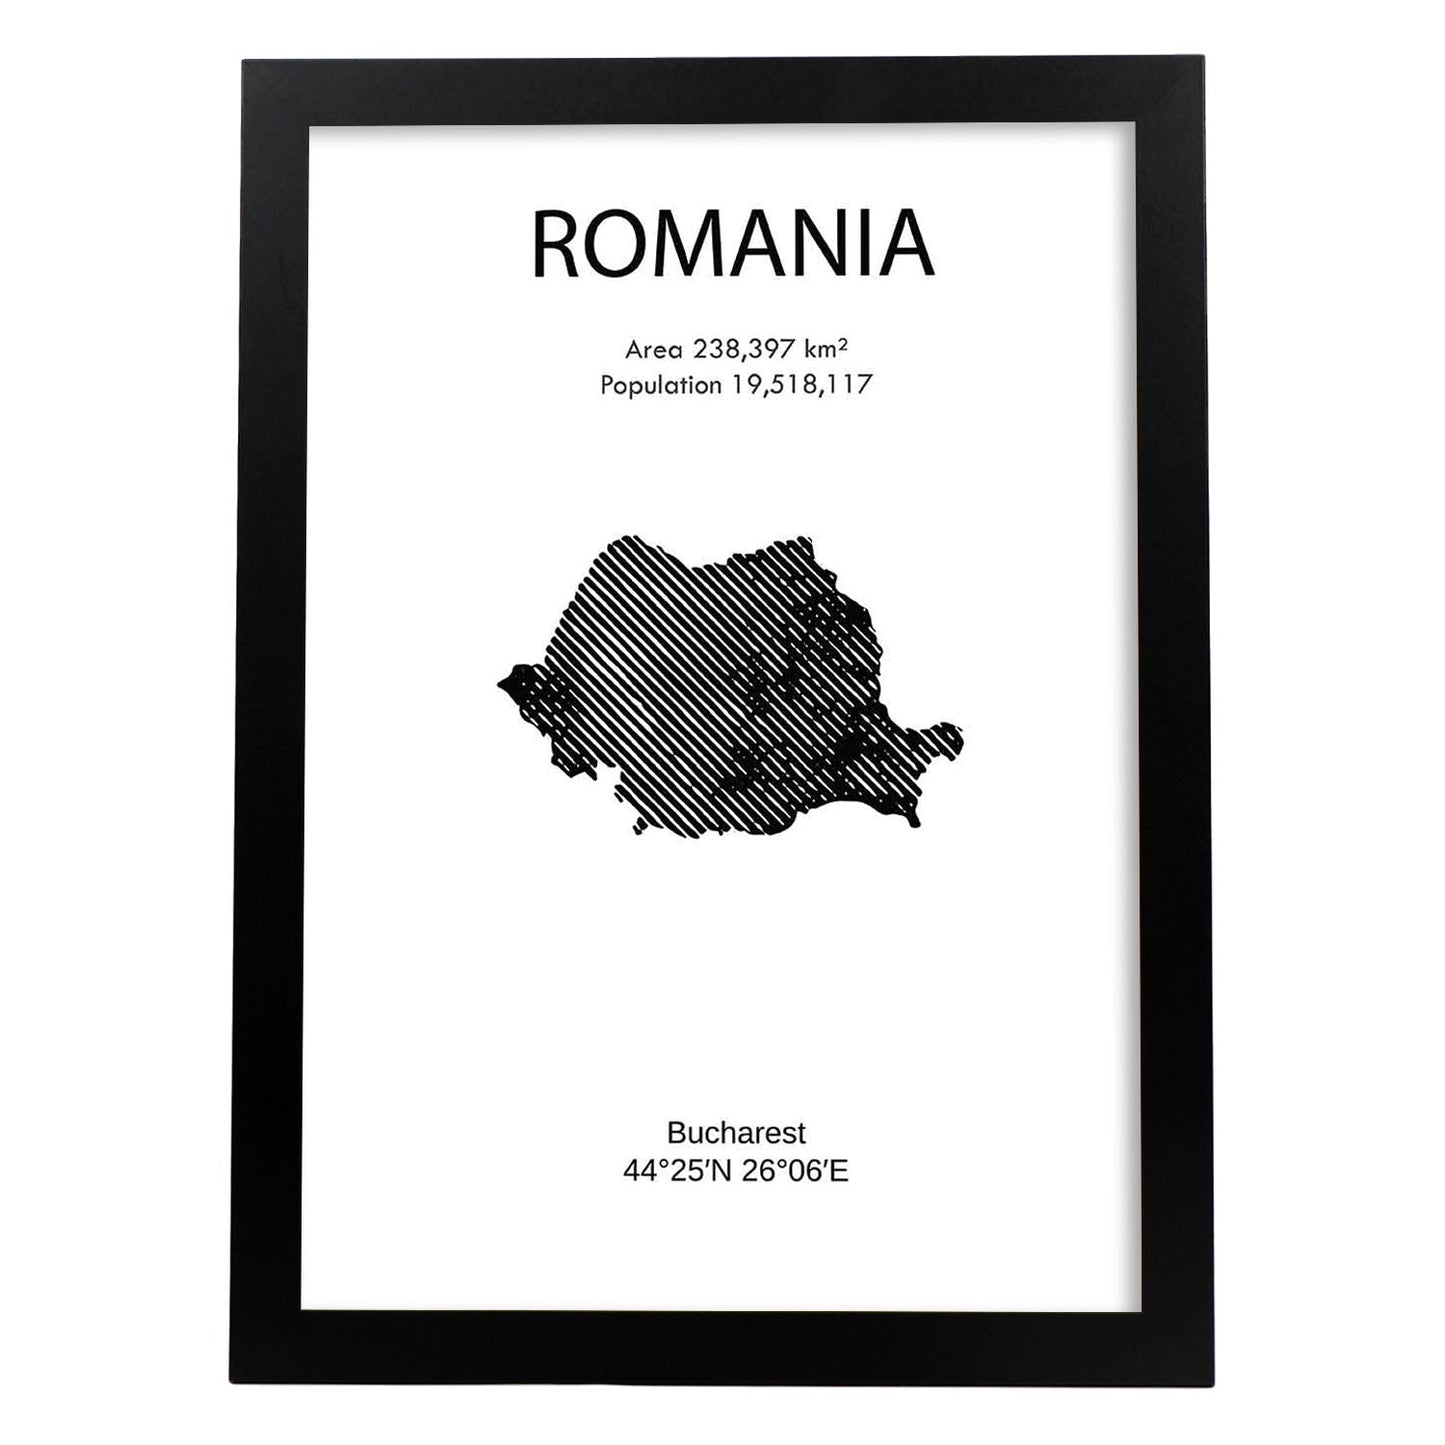 Poster de Rumanía. Láminas de paises y continentes del mundo.-Artwork-Nacnic-A4-Marco Negro-Nacnic Estudio SL